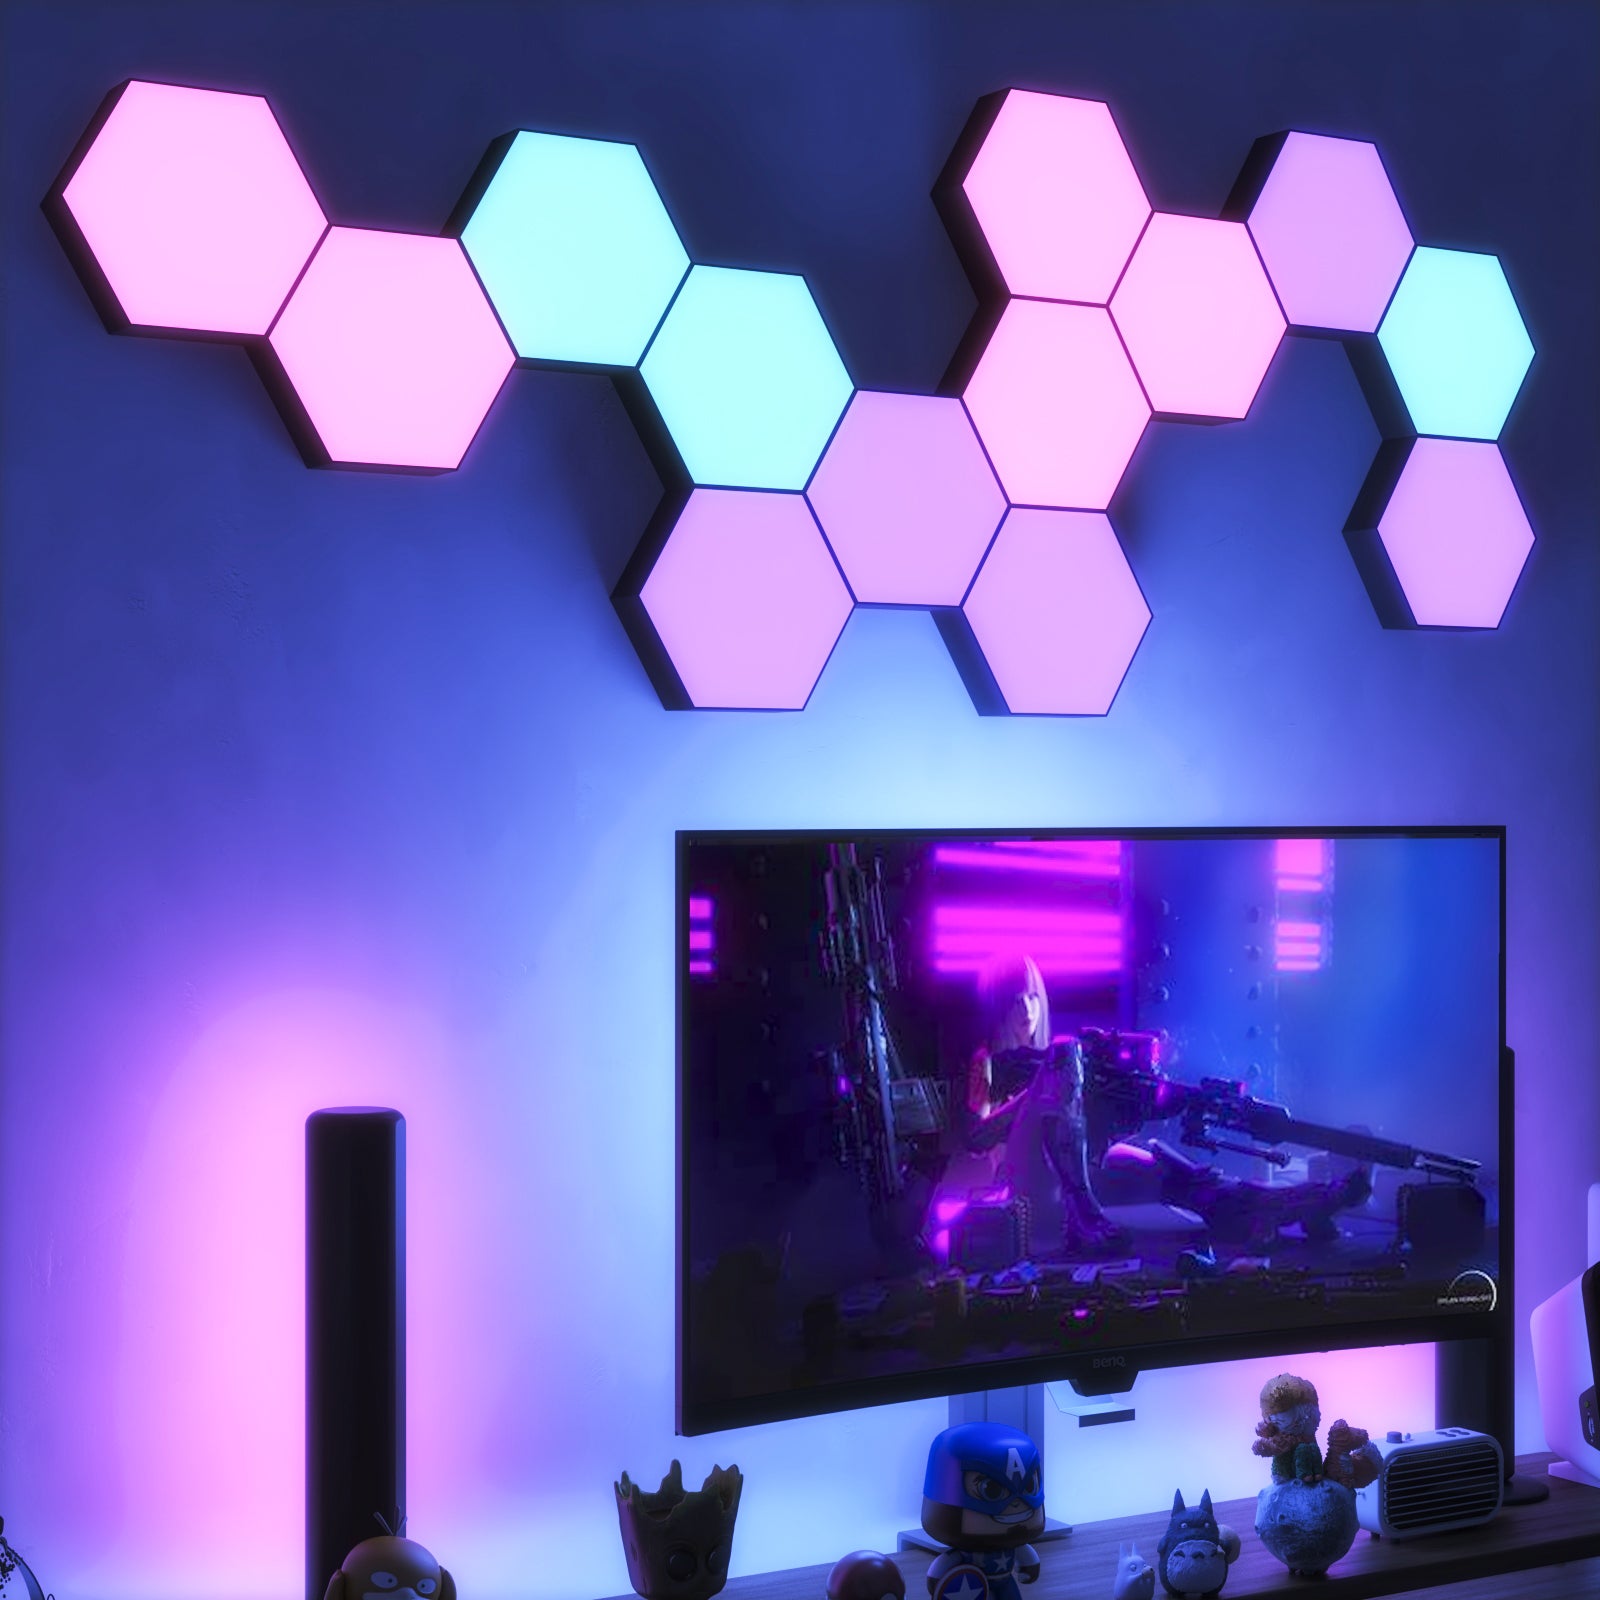 Smart Wall Panel controlled Haxegon Light